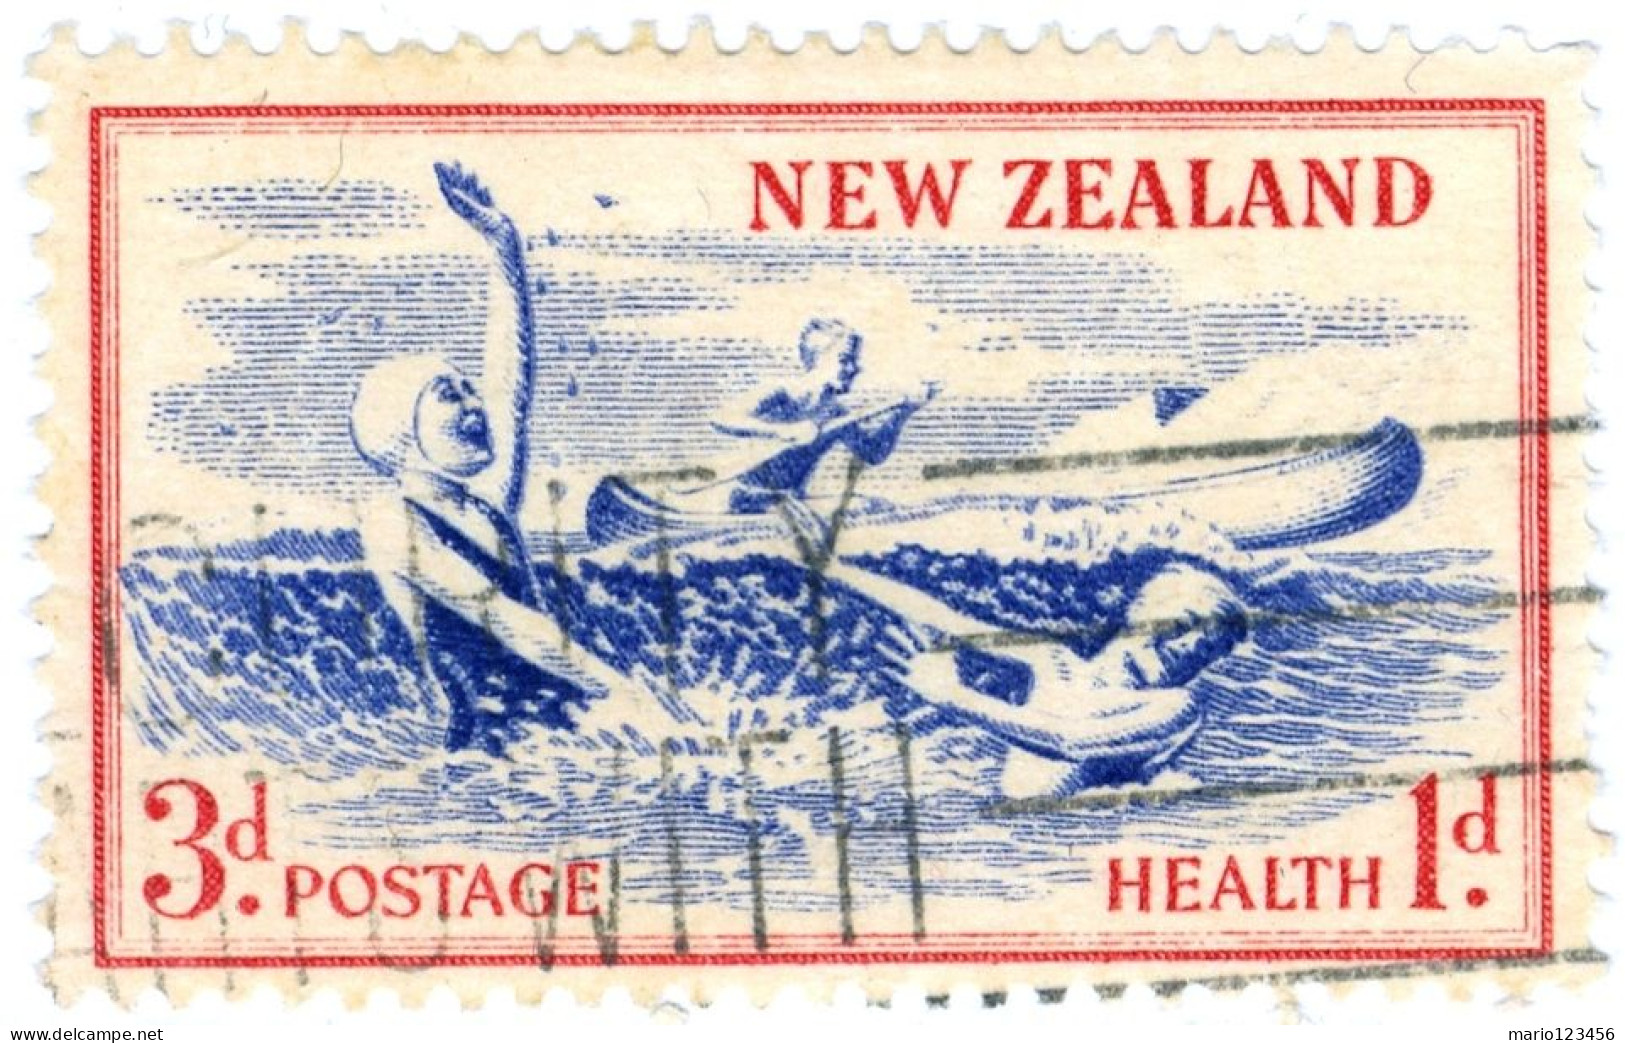 NUOVA ZELANDA, NEW ZEALAND, SPORT, 1957, FRANCOBOLLI USATI Scott:NZ B53, Yt:NZ 363, Sg:NZ 762 - Used Stamps